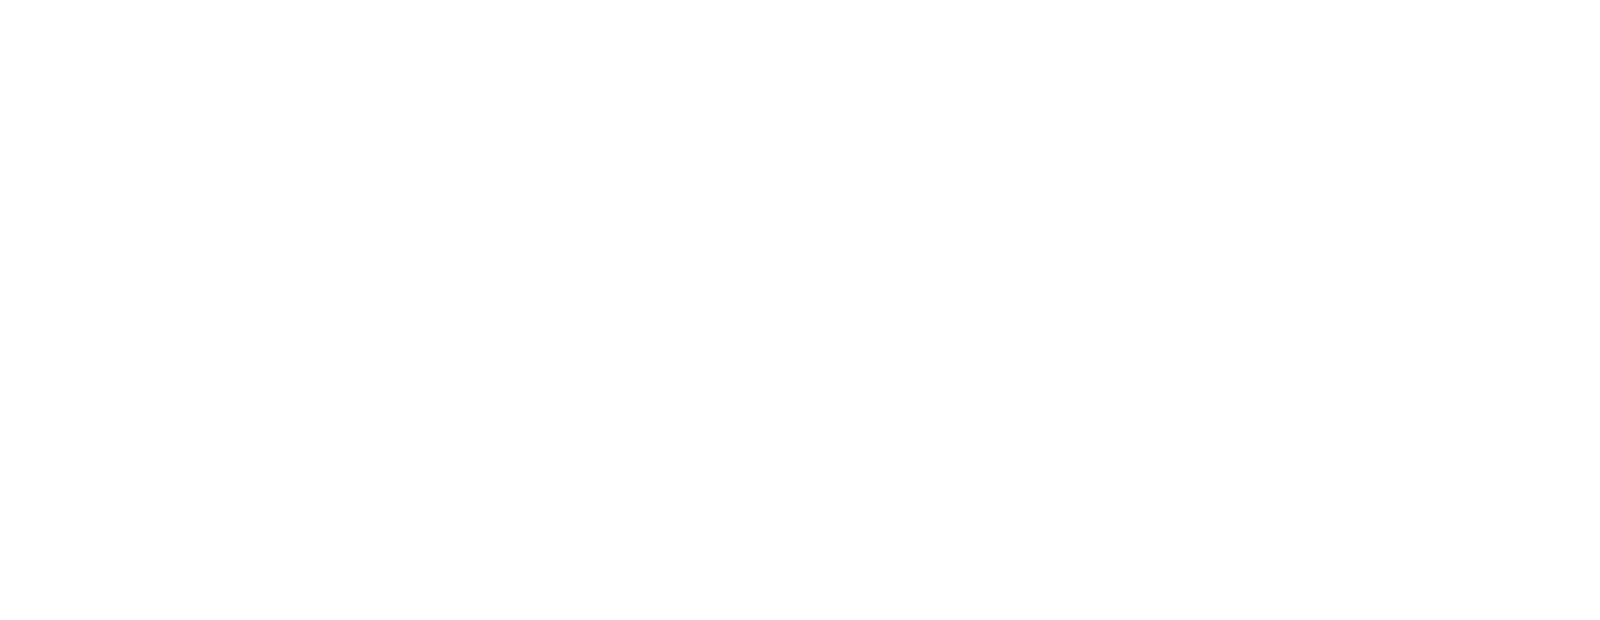 Dell Technologies Logo - Dell Technologies World 2019